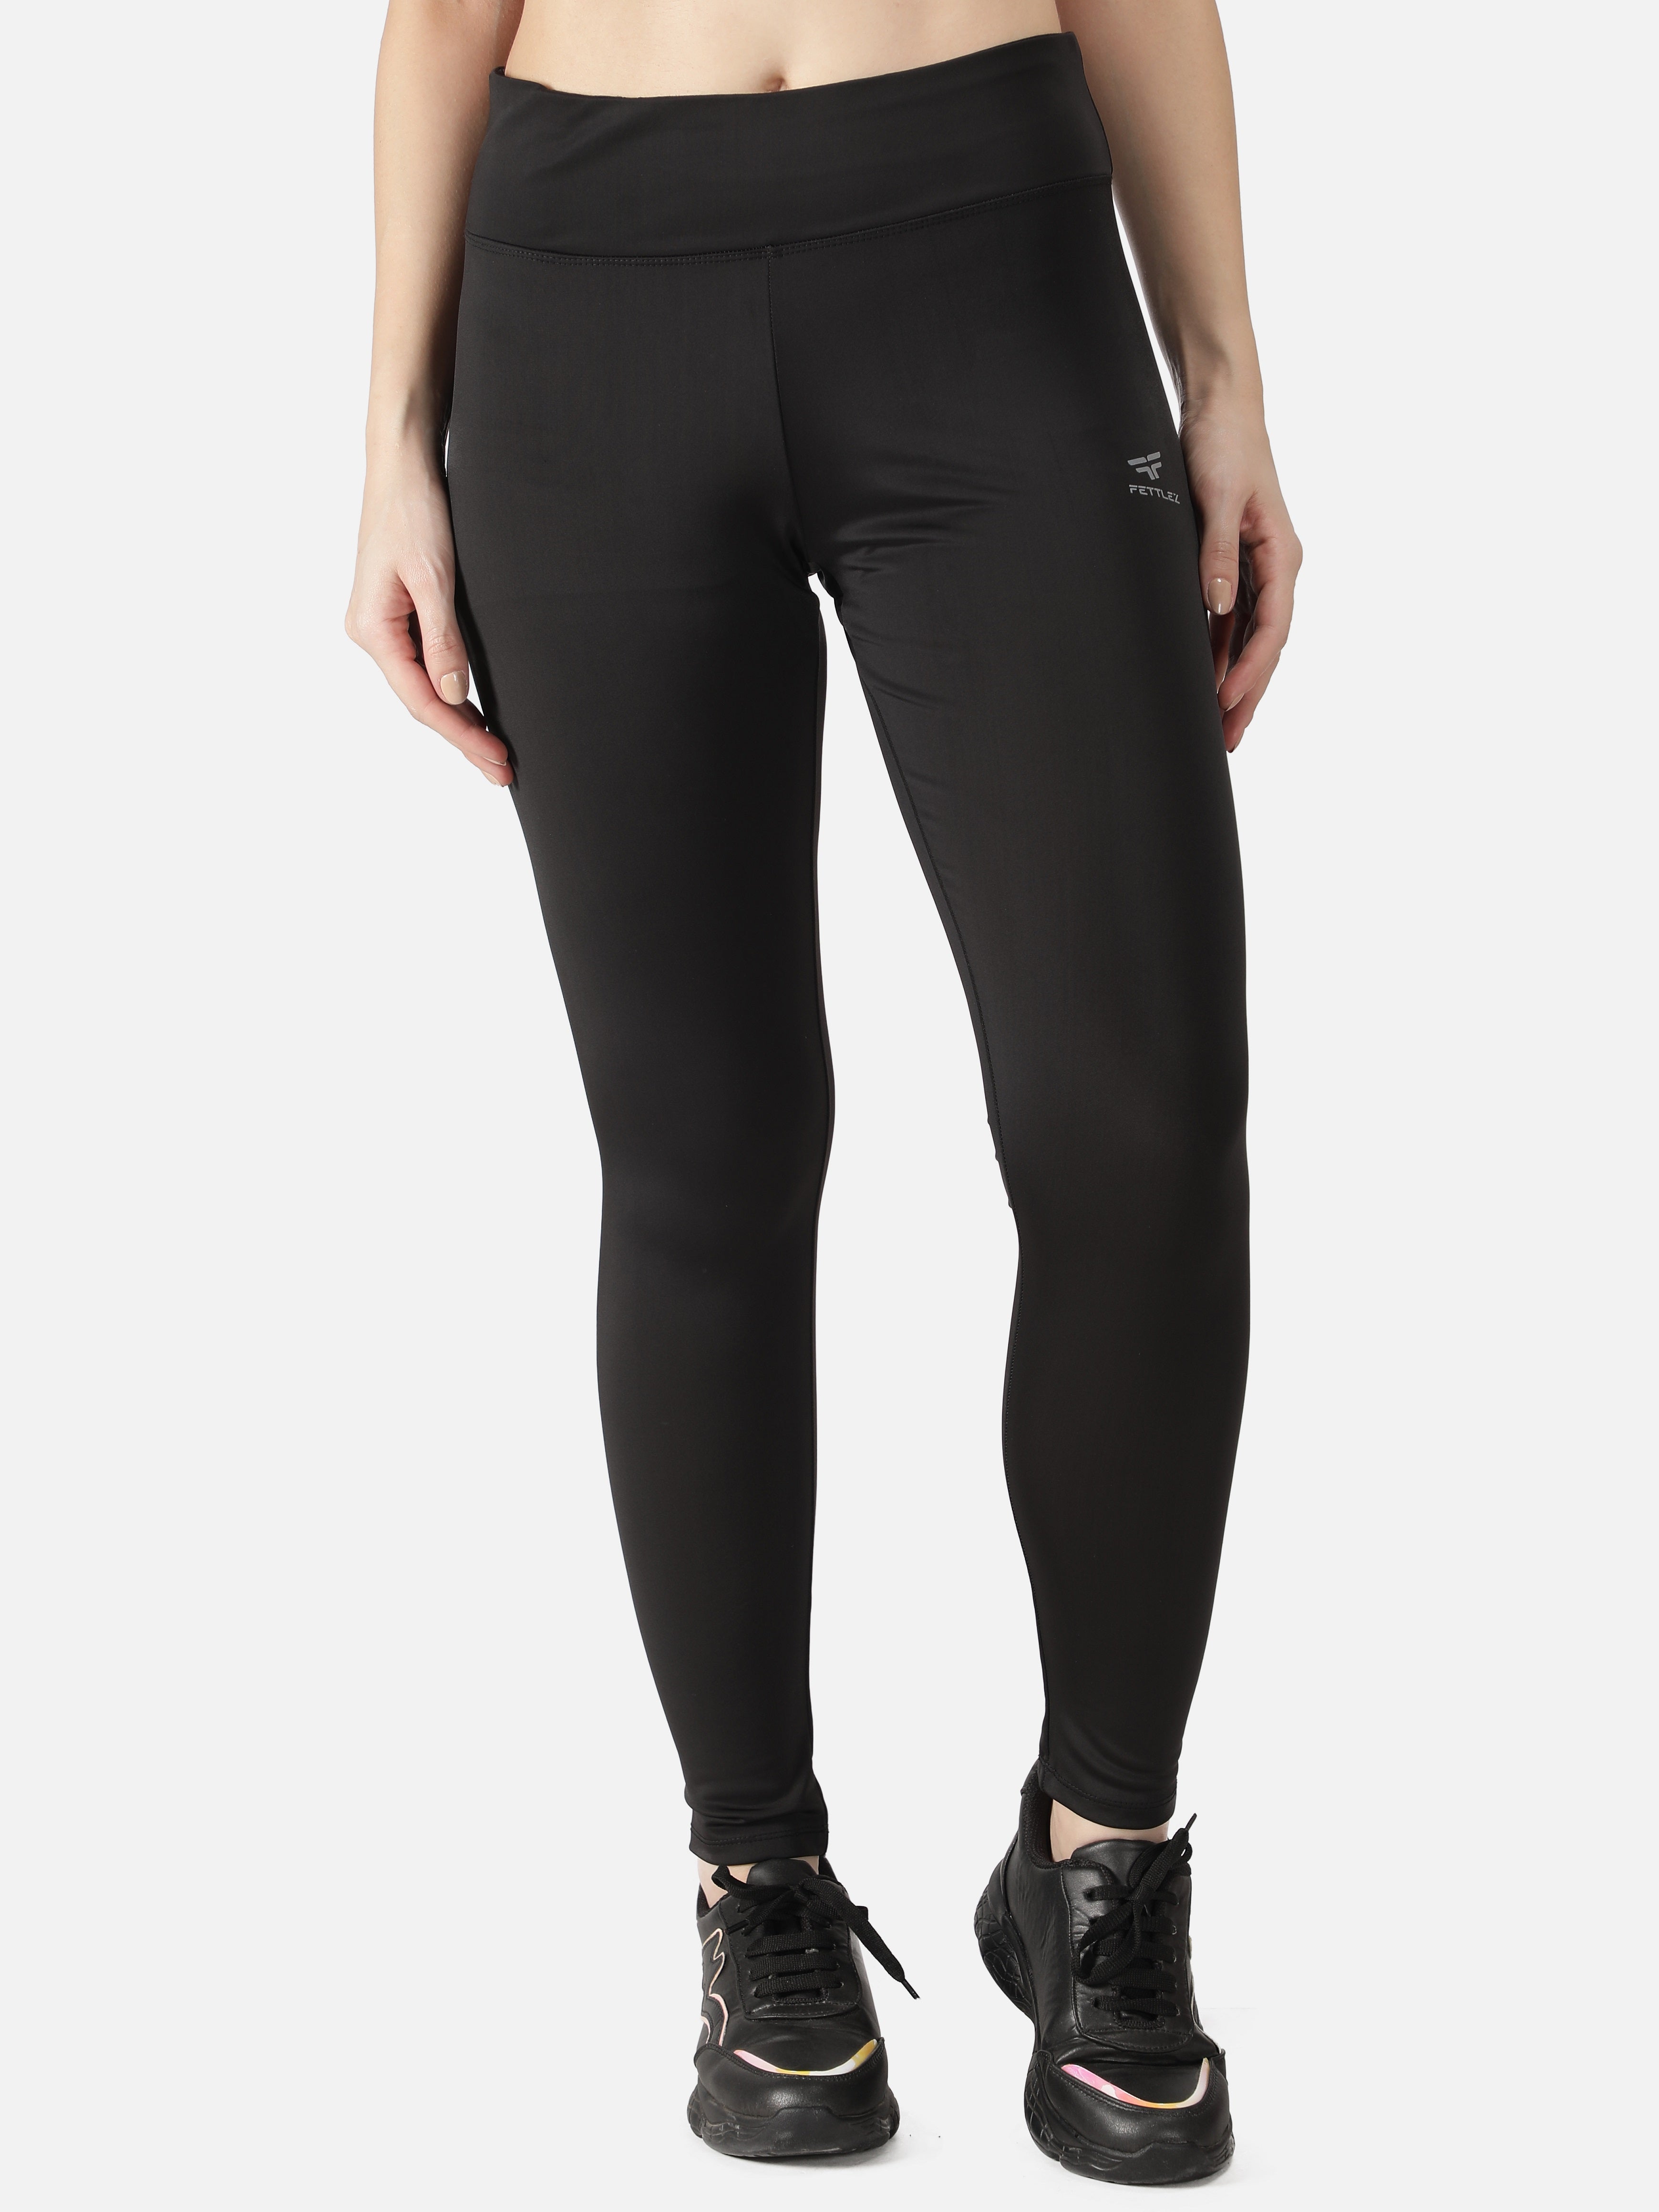 Adidas Leggings Womens Small Black with White Originals Track Stripe AJ8156  | eBay